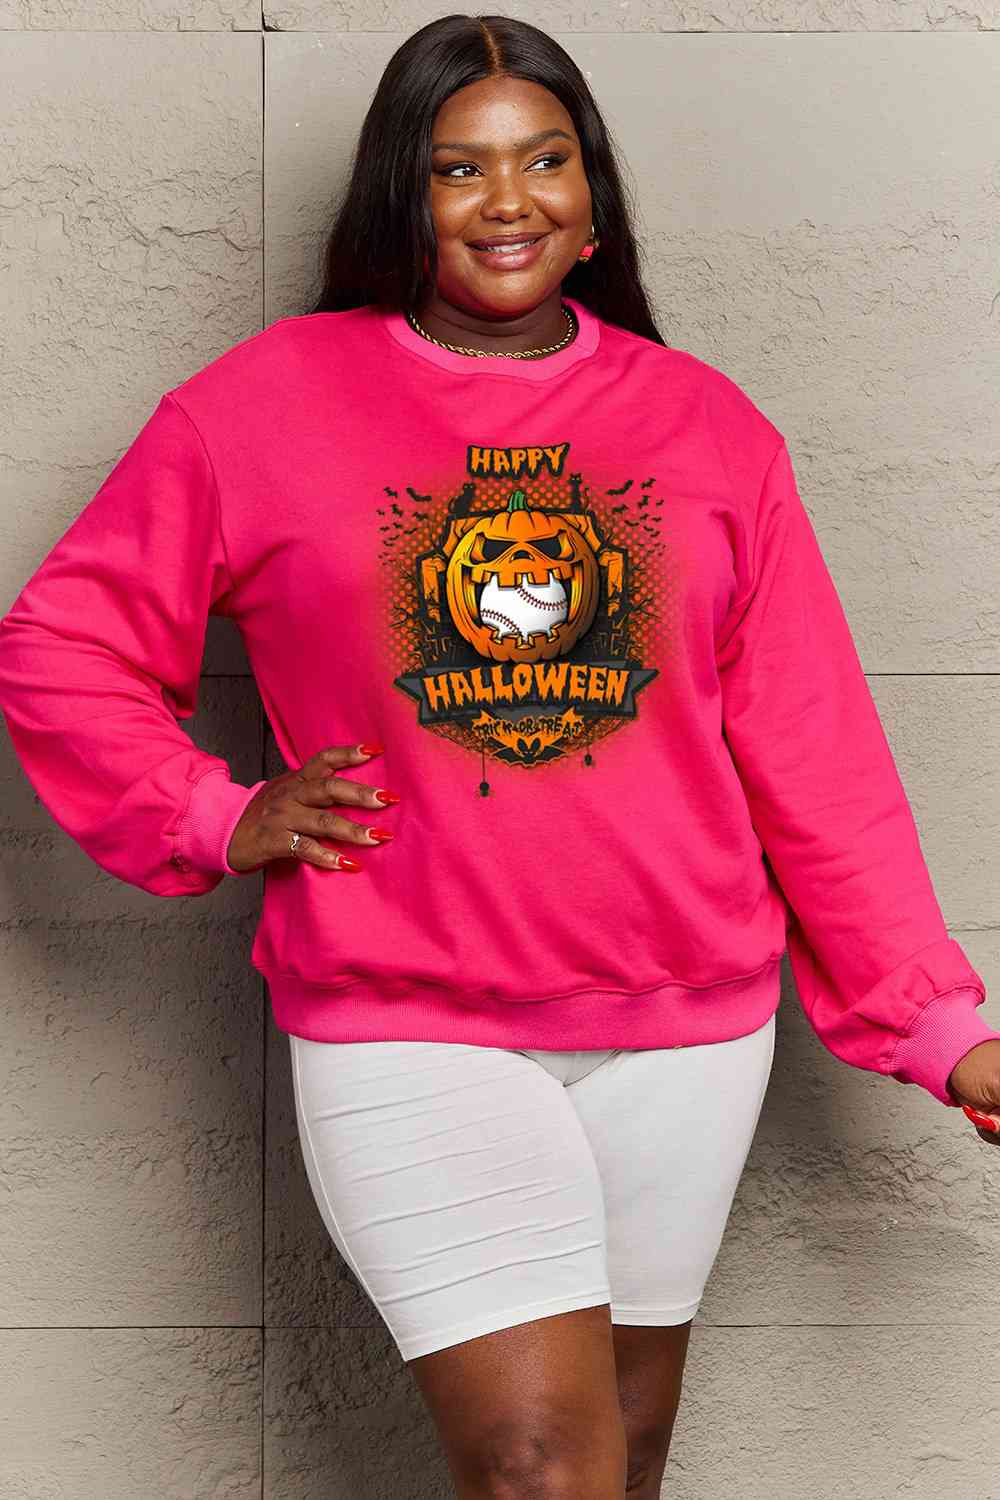 Simply Love Full Size HAPPY HALLOWEEN Graphic Sweatshirt